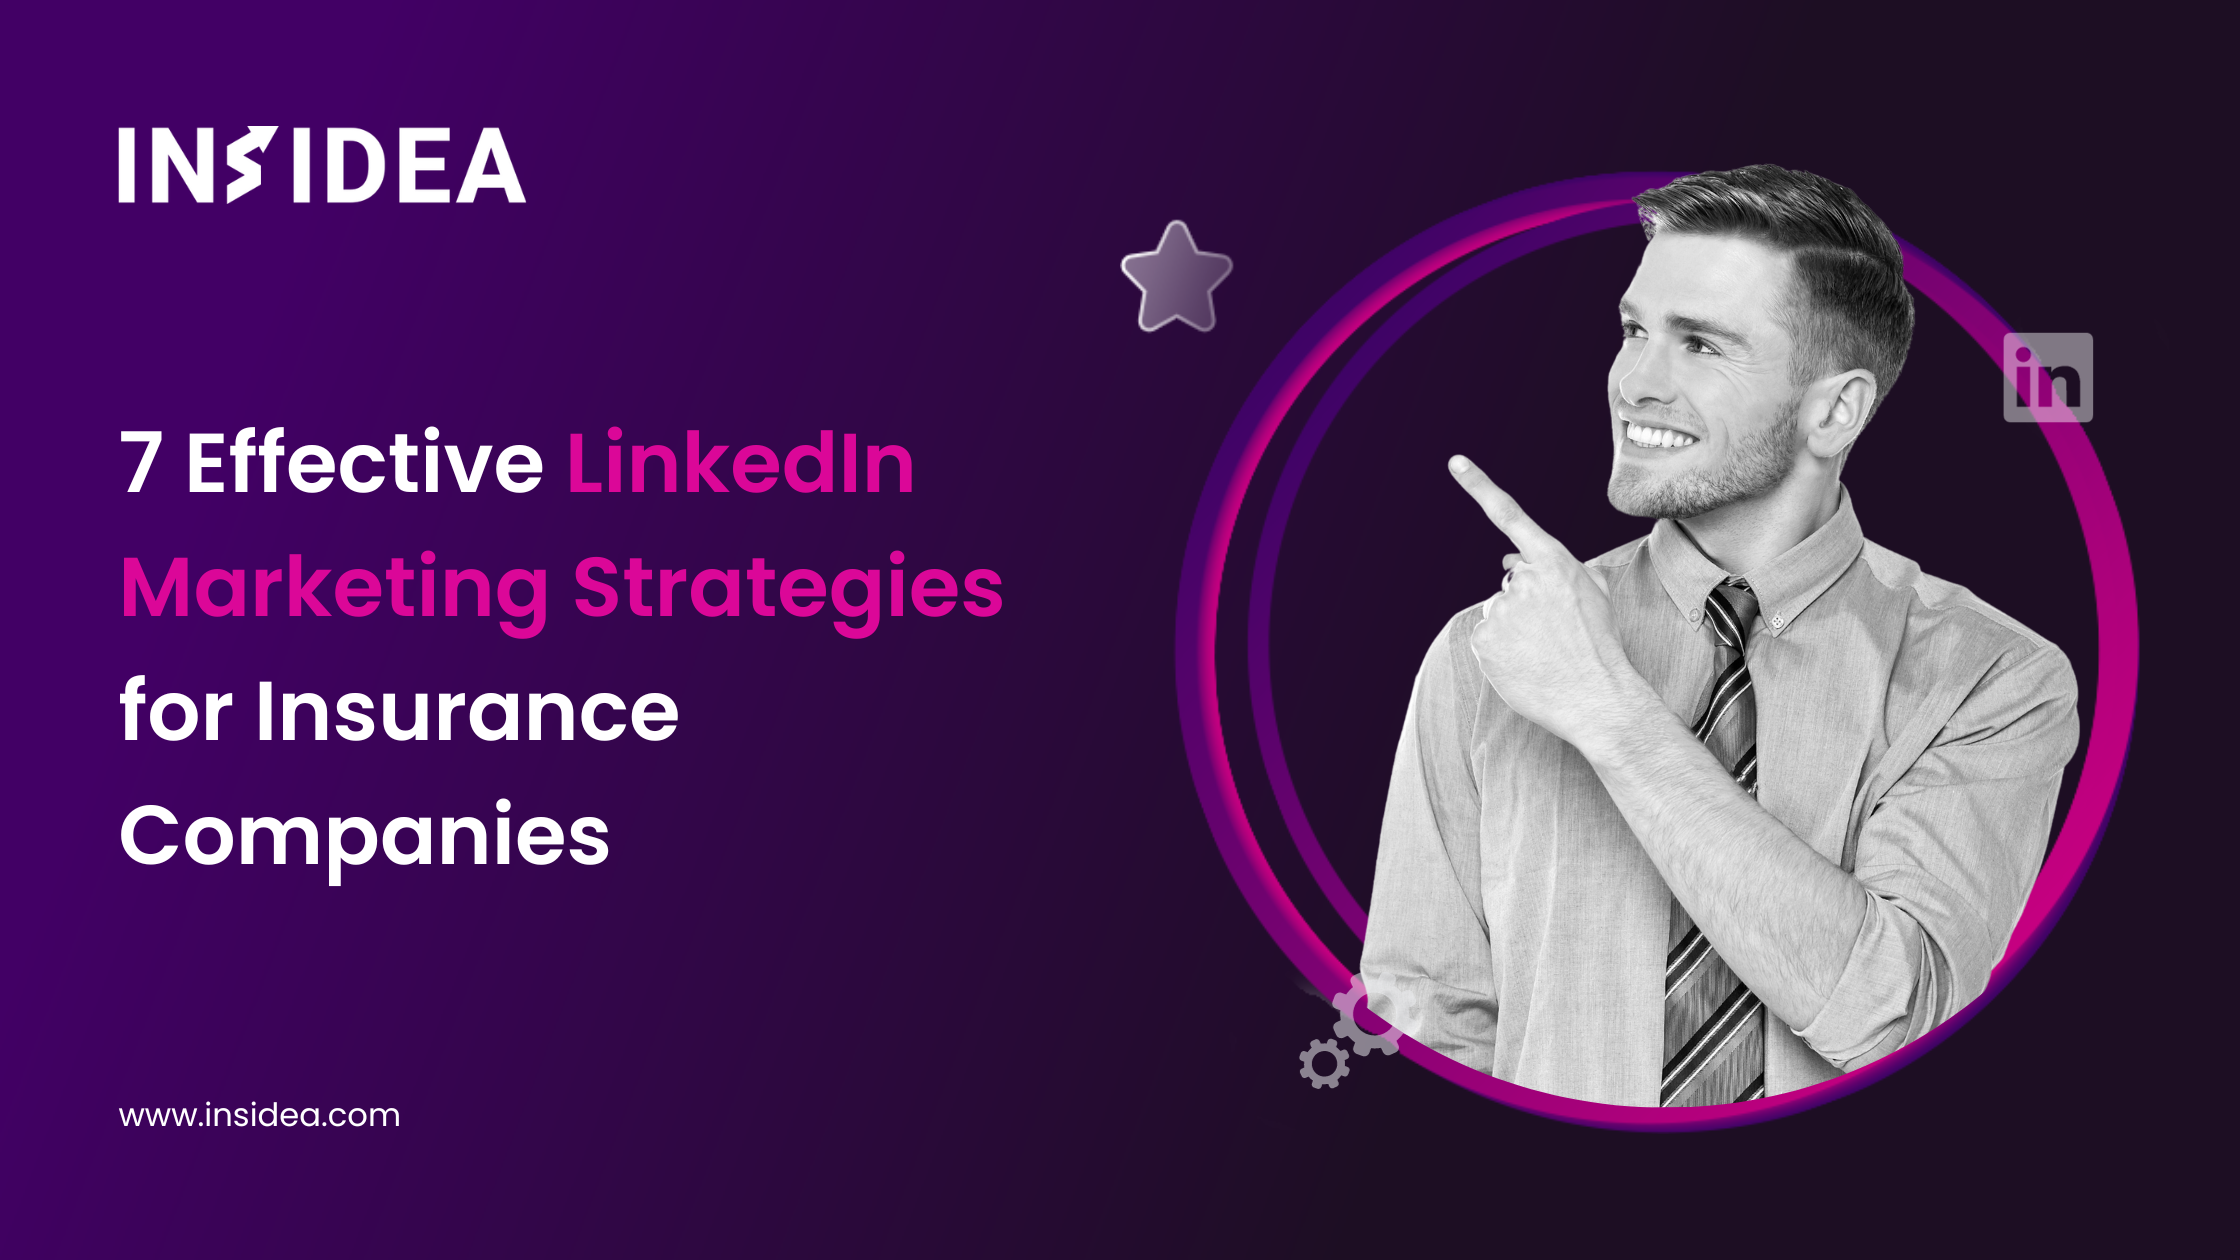 7 Effective LinkedIn Marketing Strategies for Insurance Companies